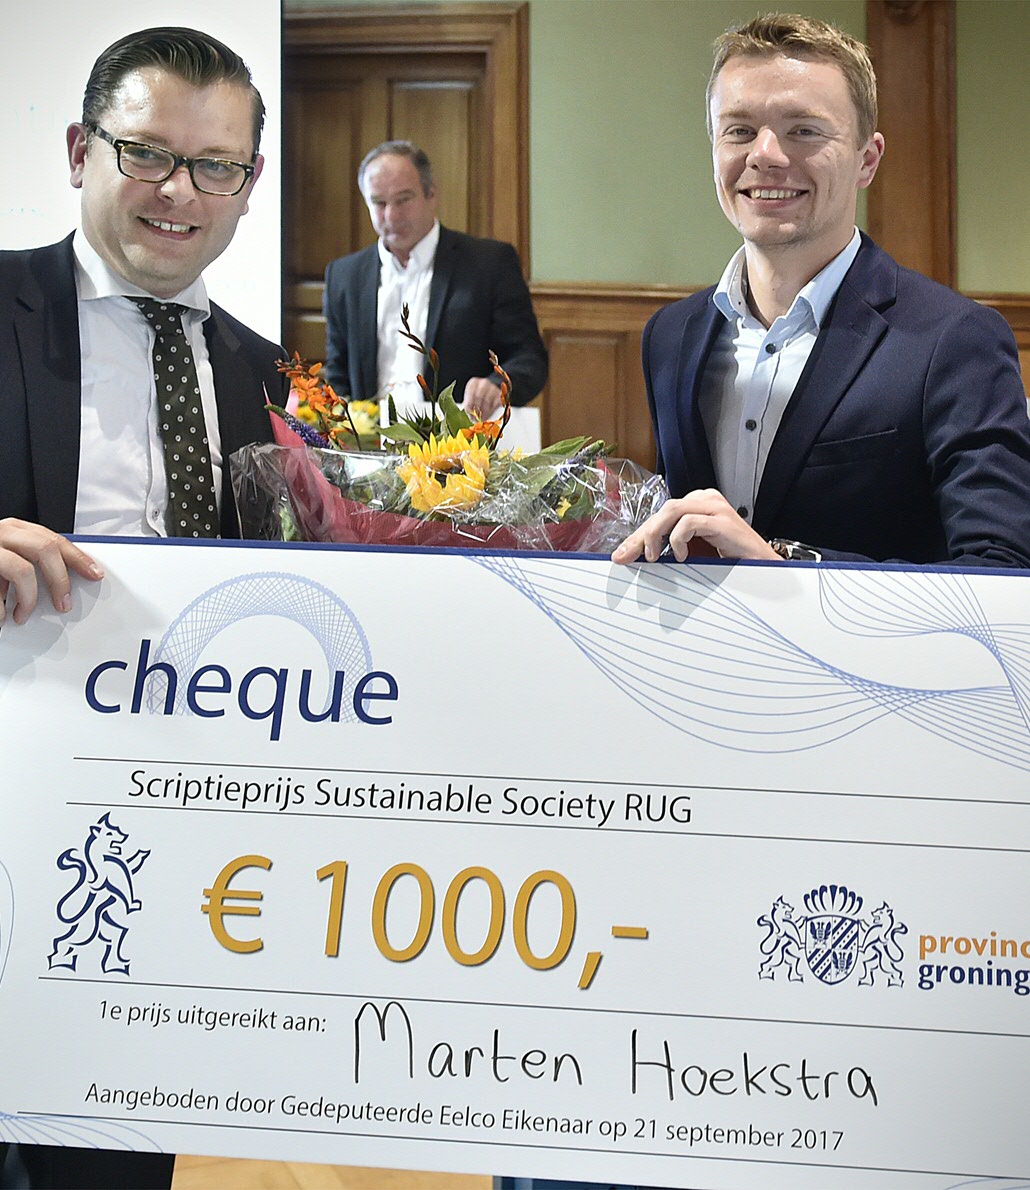 Eelco Eikenaar with thesis prize winners